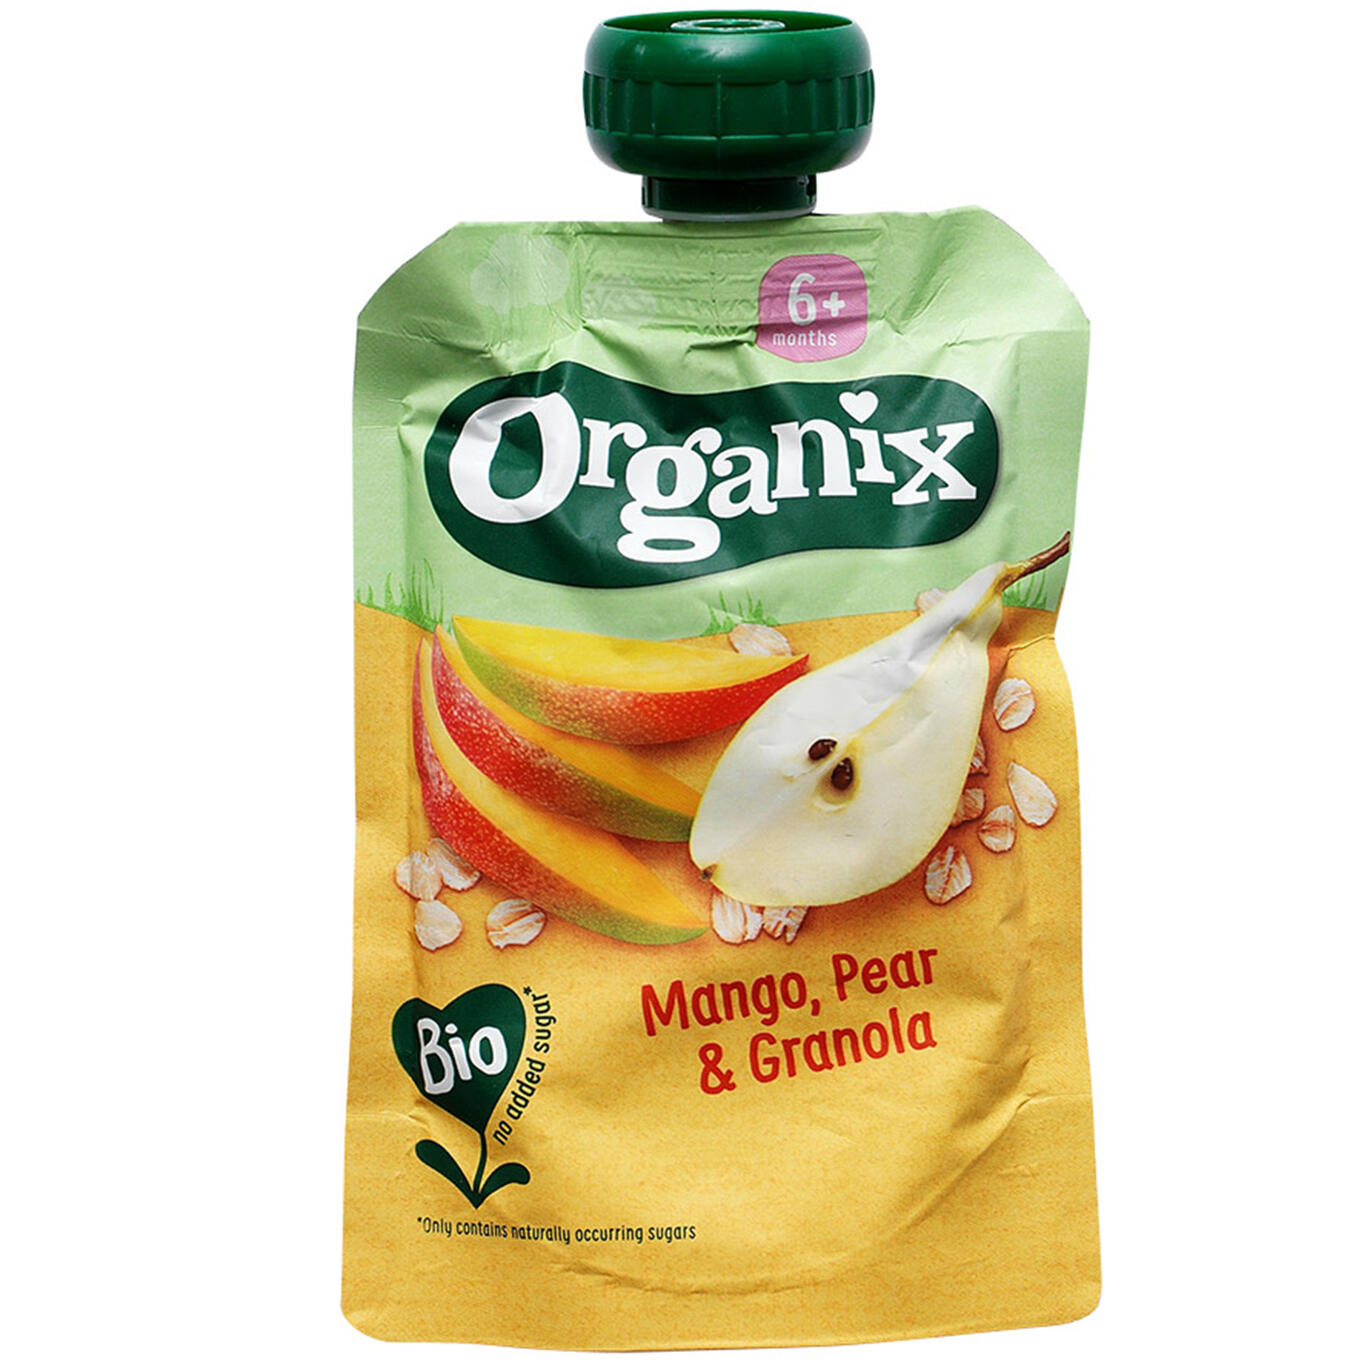 Mango, Pear & Granola Organix